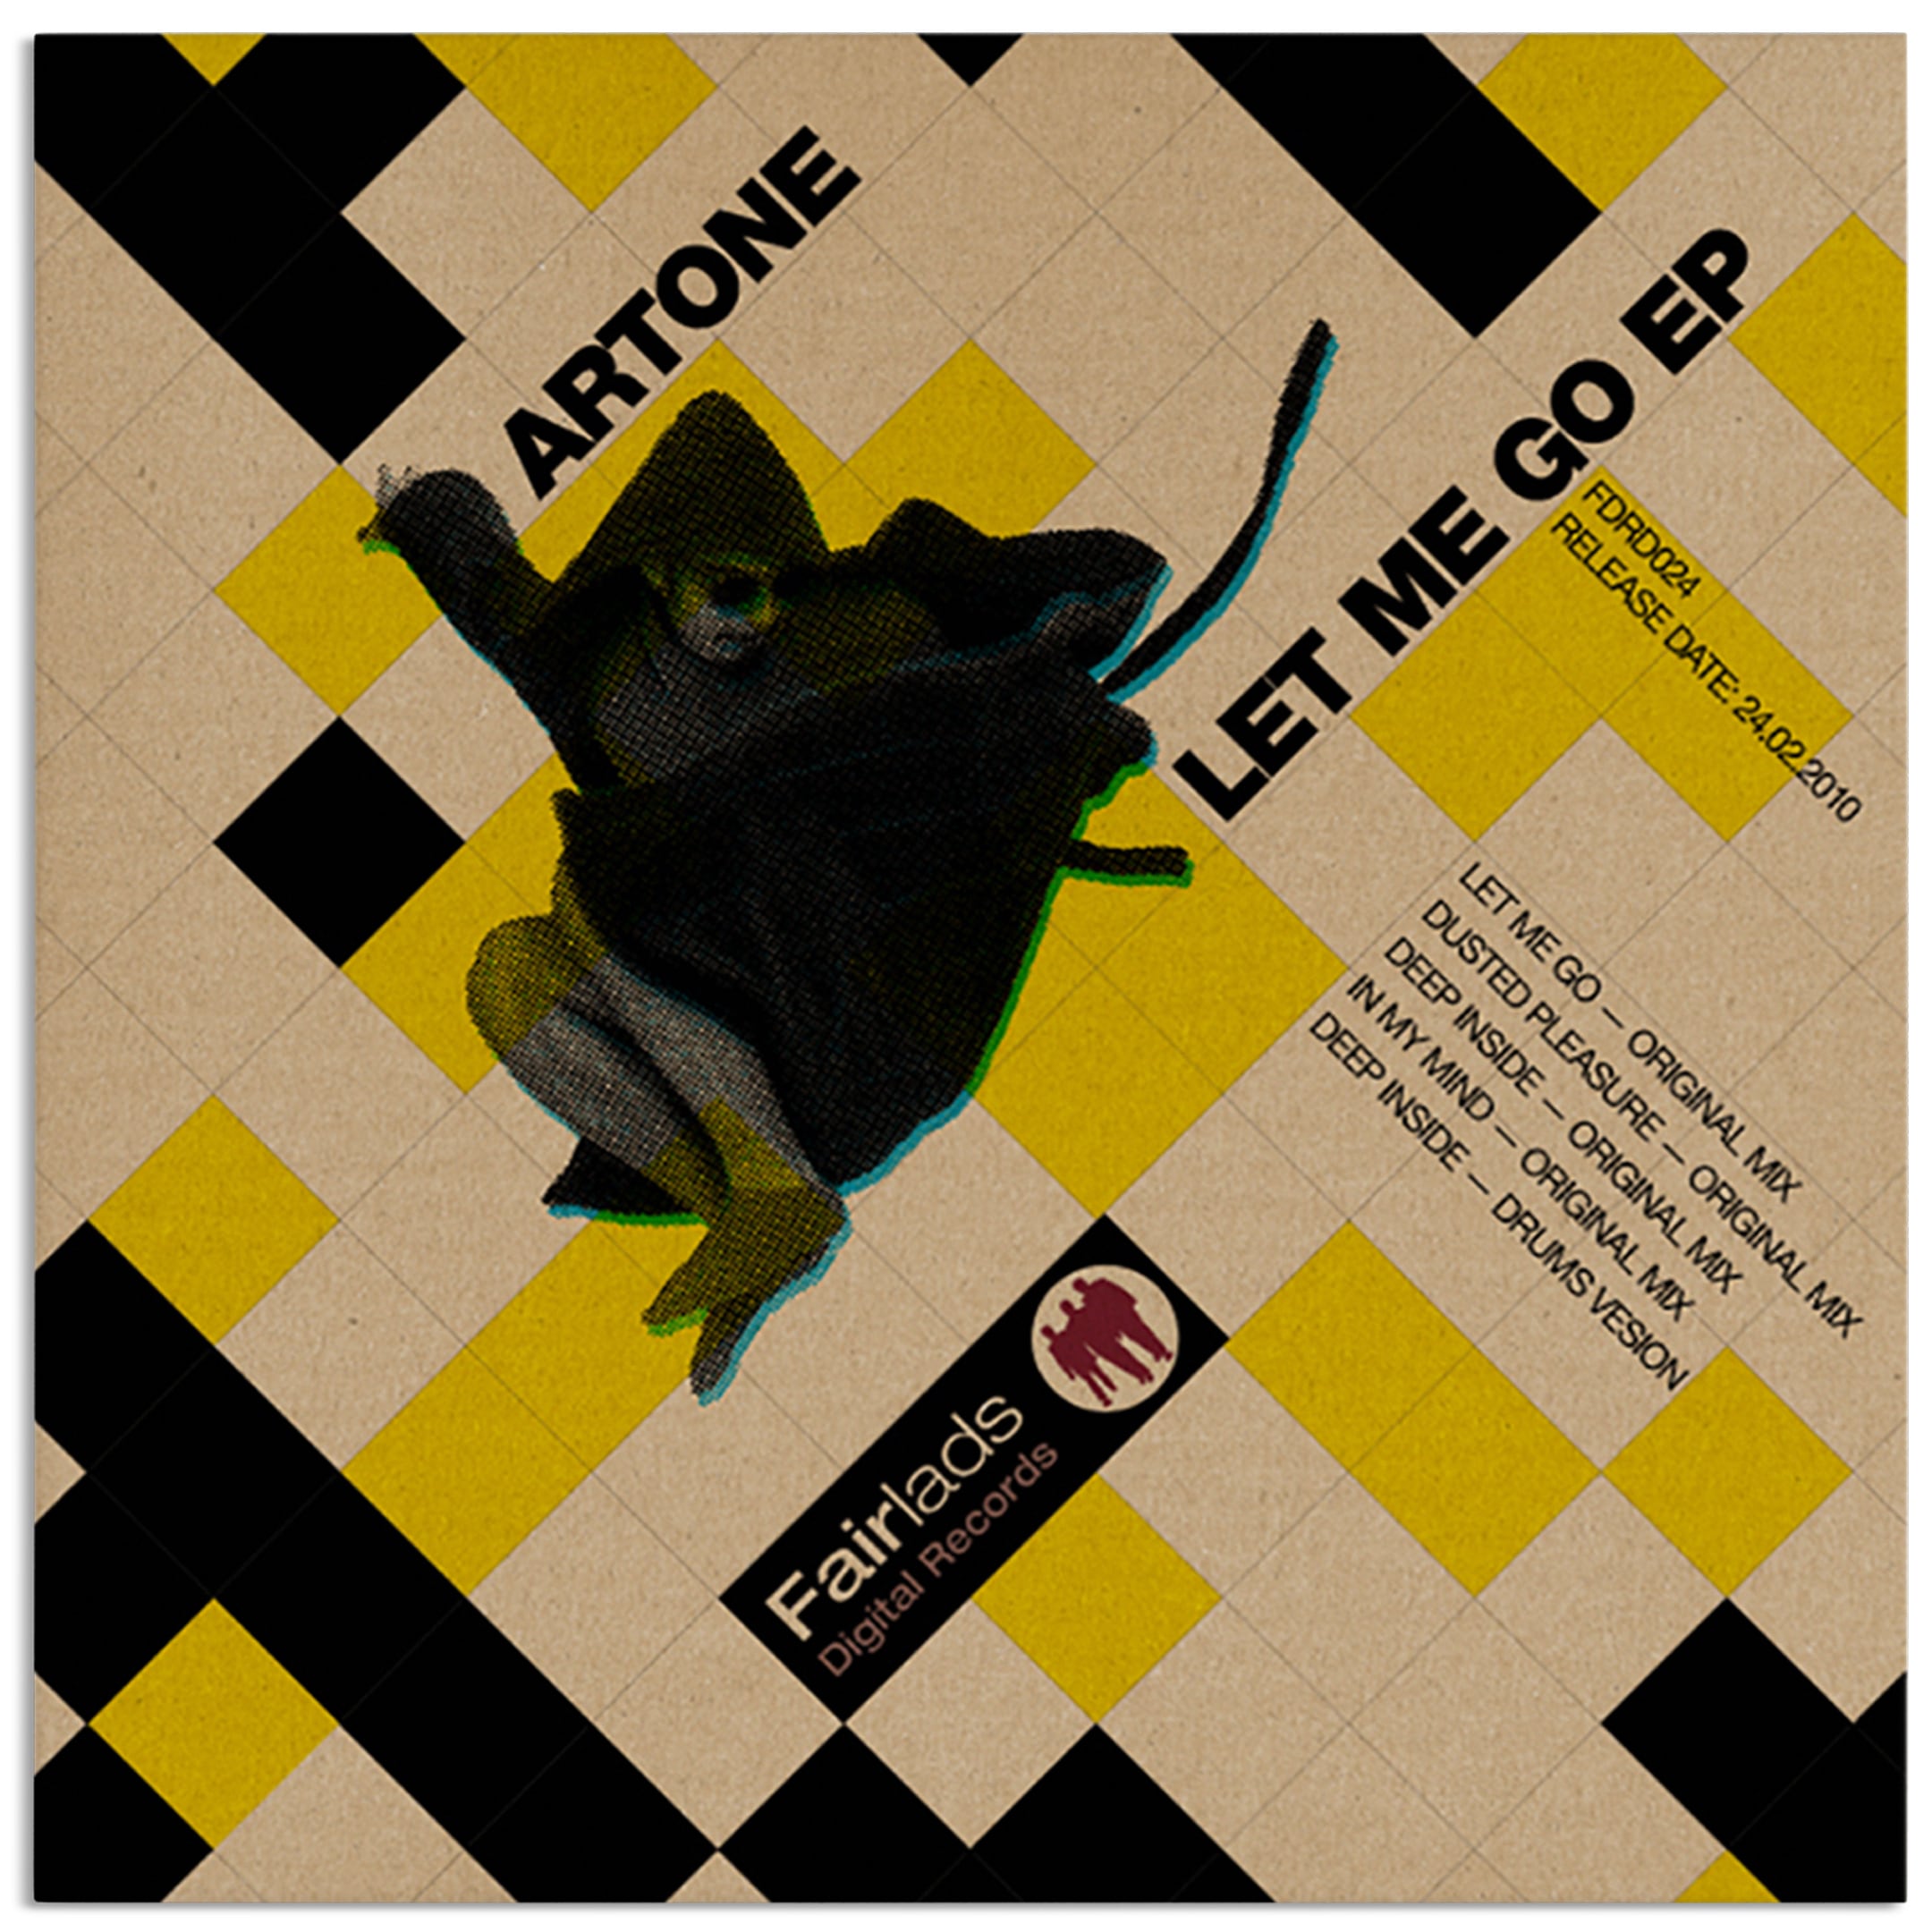 Artone - Let Me Go EP Album Artwork